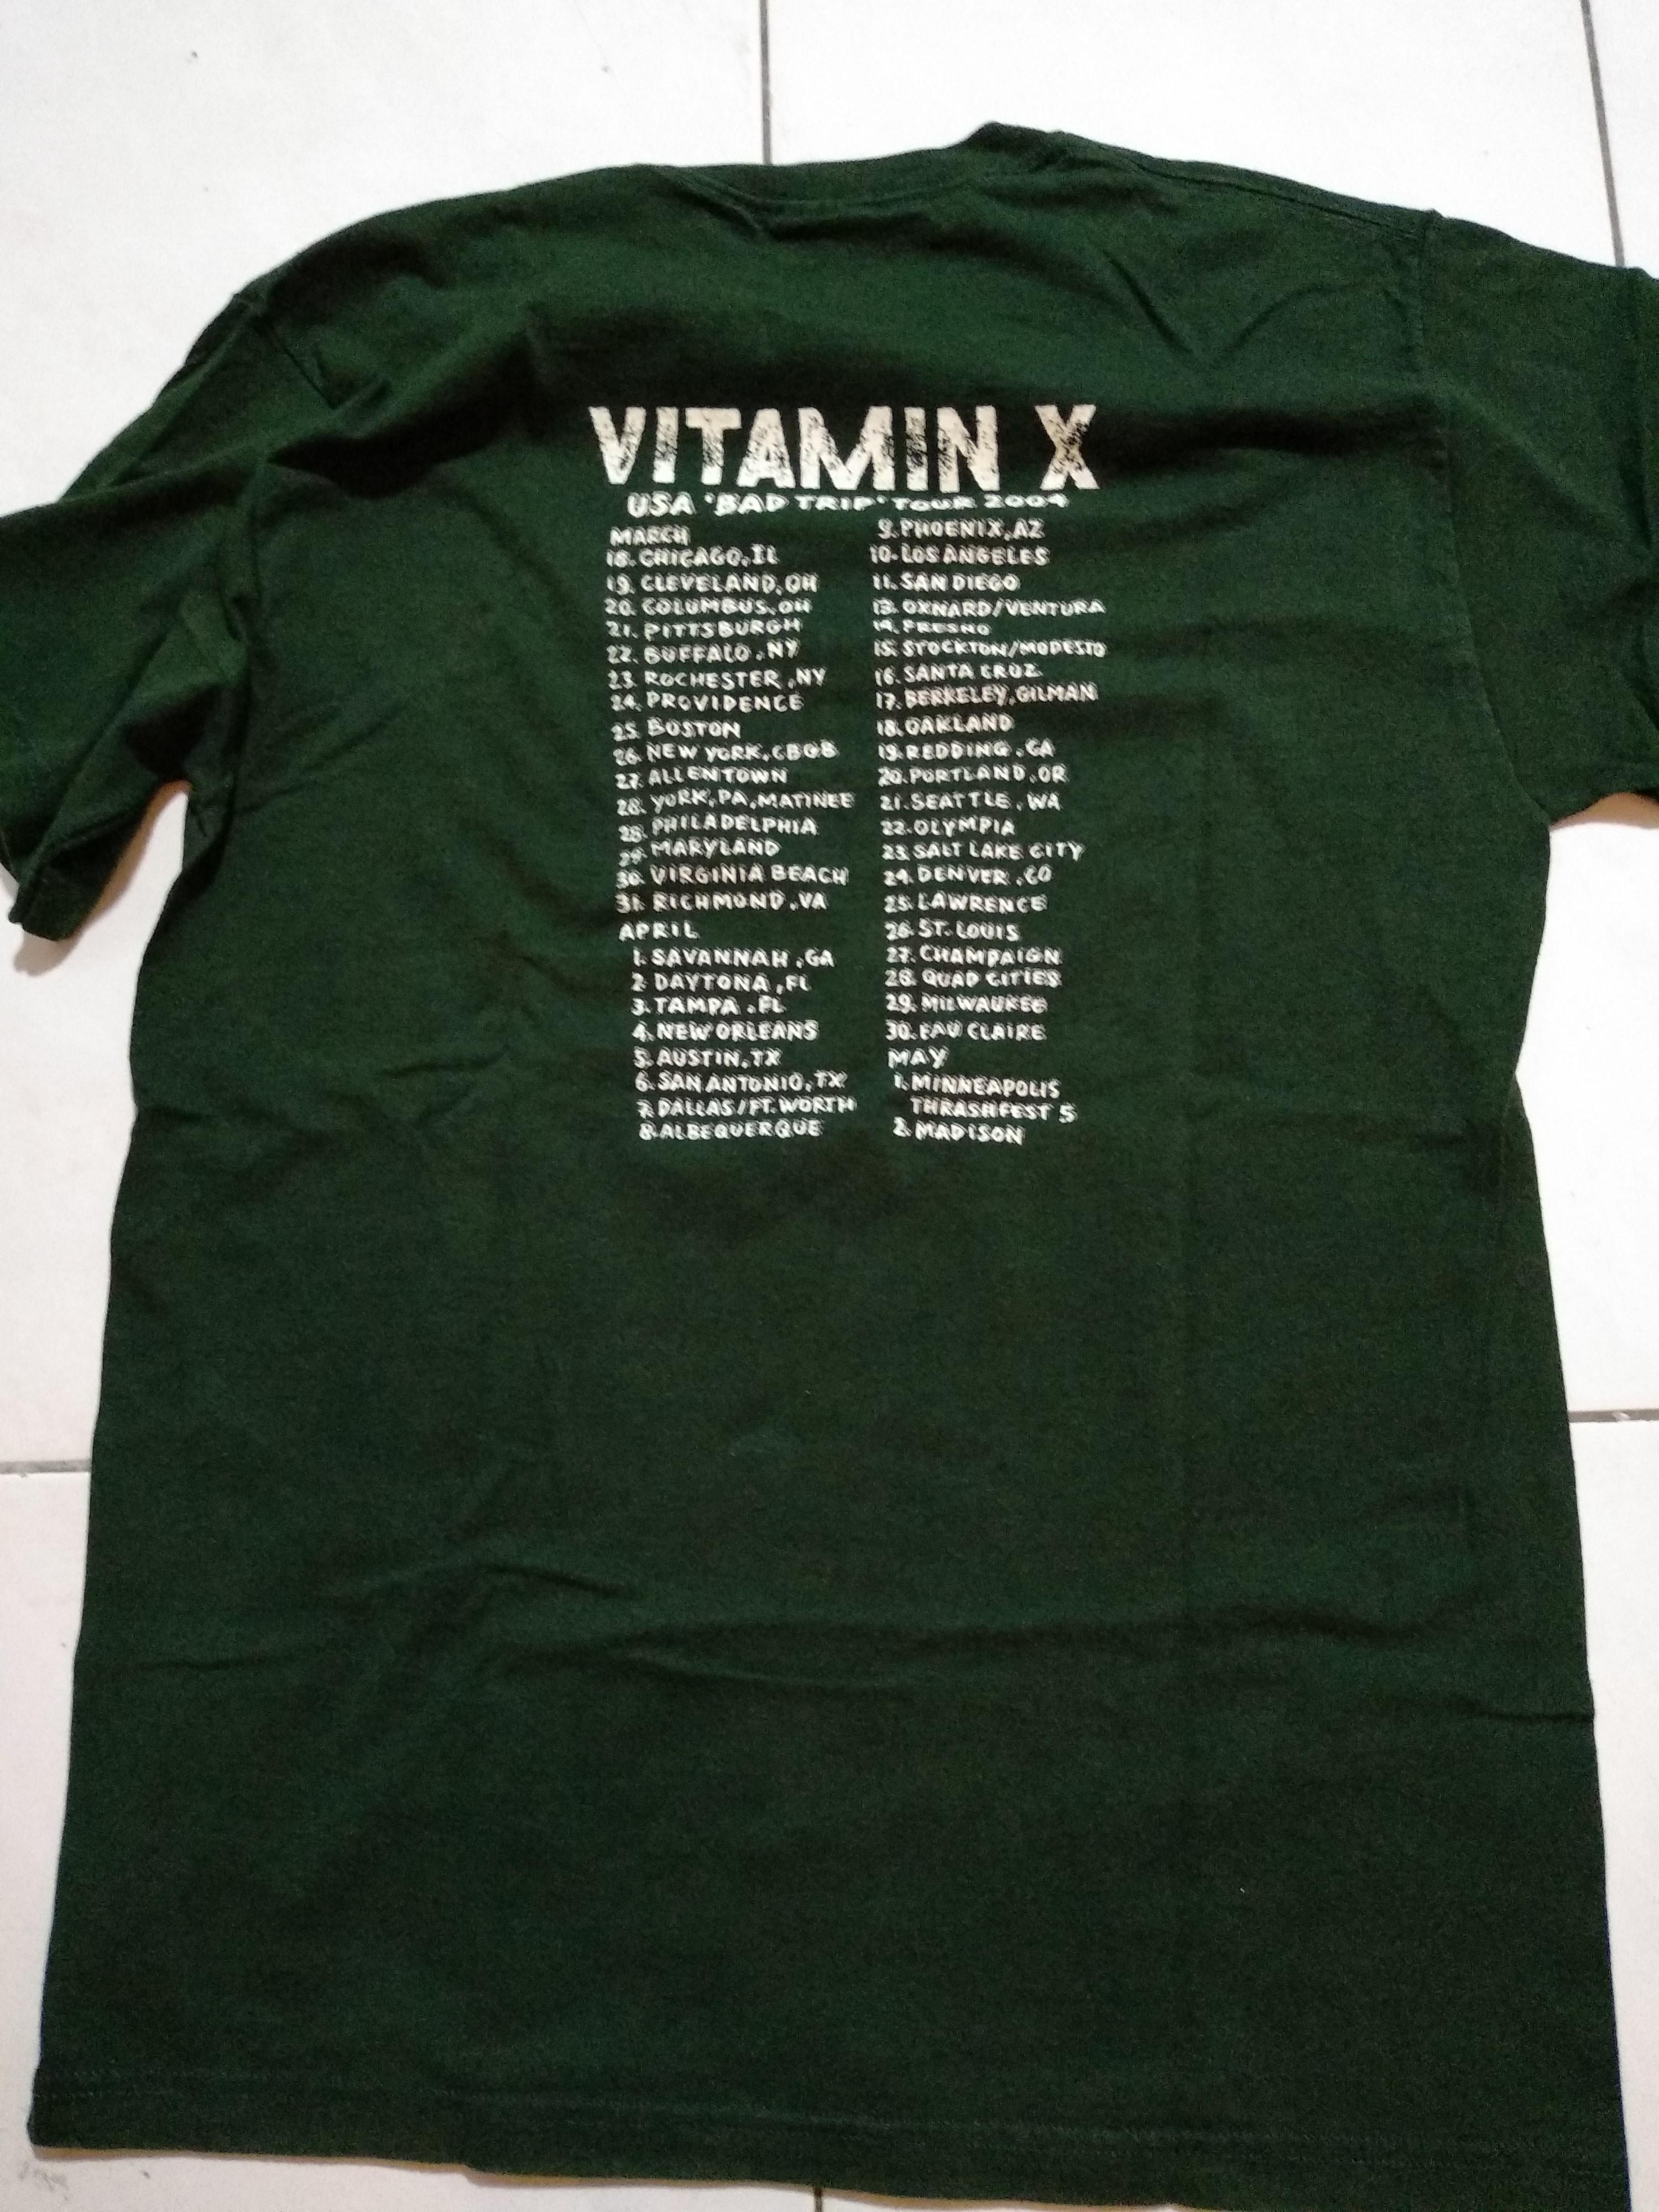 Band shirt; Vitamin X